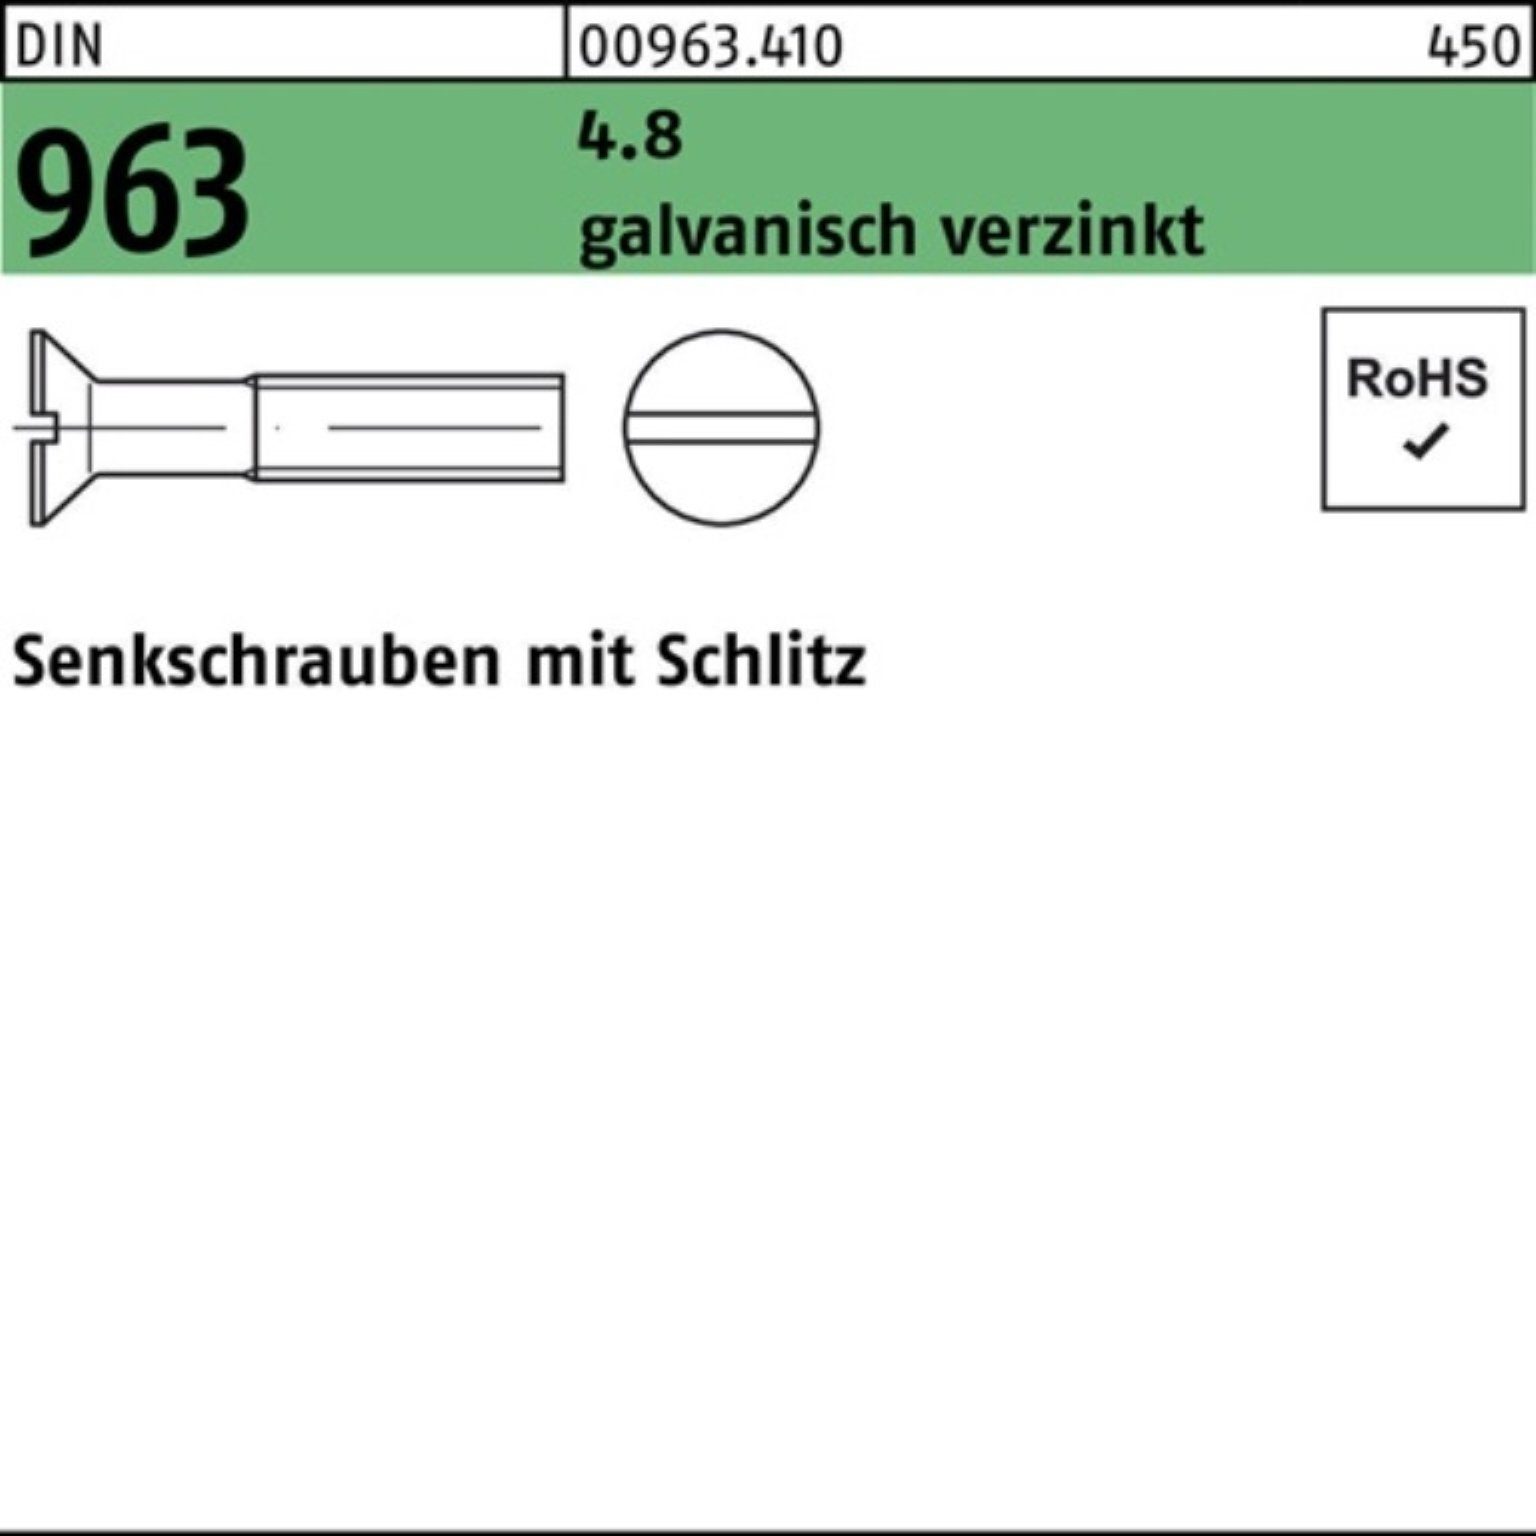 Pack 200er Senkschraube Reyher 60 Stü 4.8 963 Senkschraube galv.verz. Schlitz 200 DIN M6x